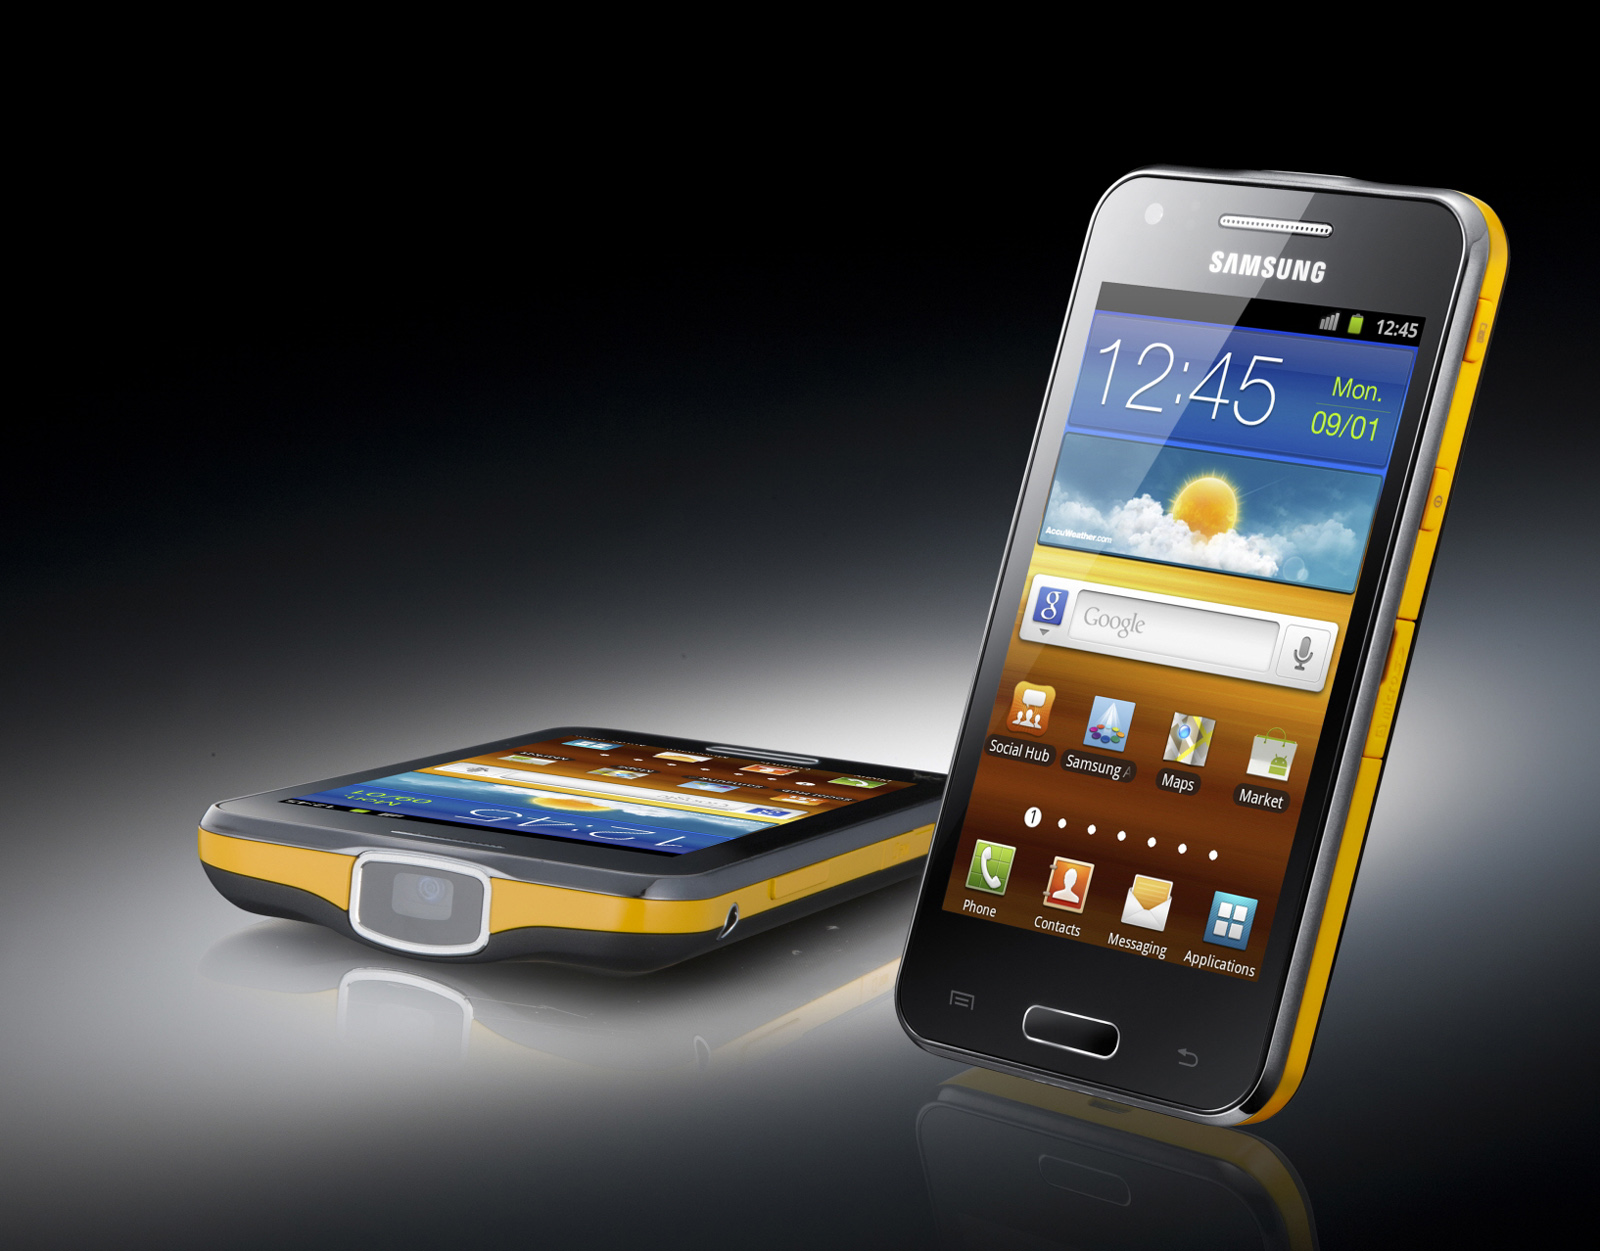 Samsung Galaxy Beam Projector Smartphone - Branded Stuff